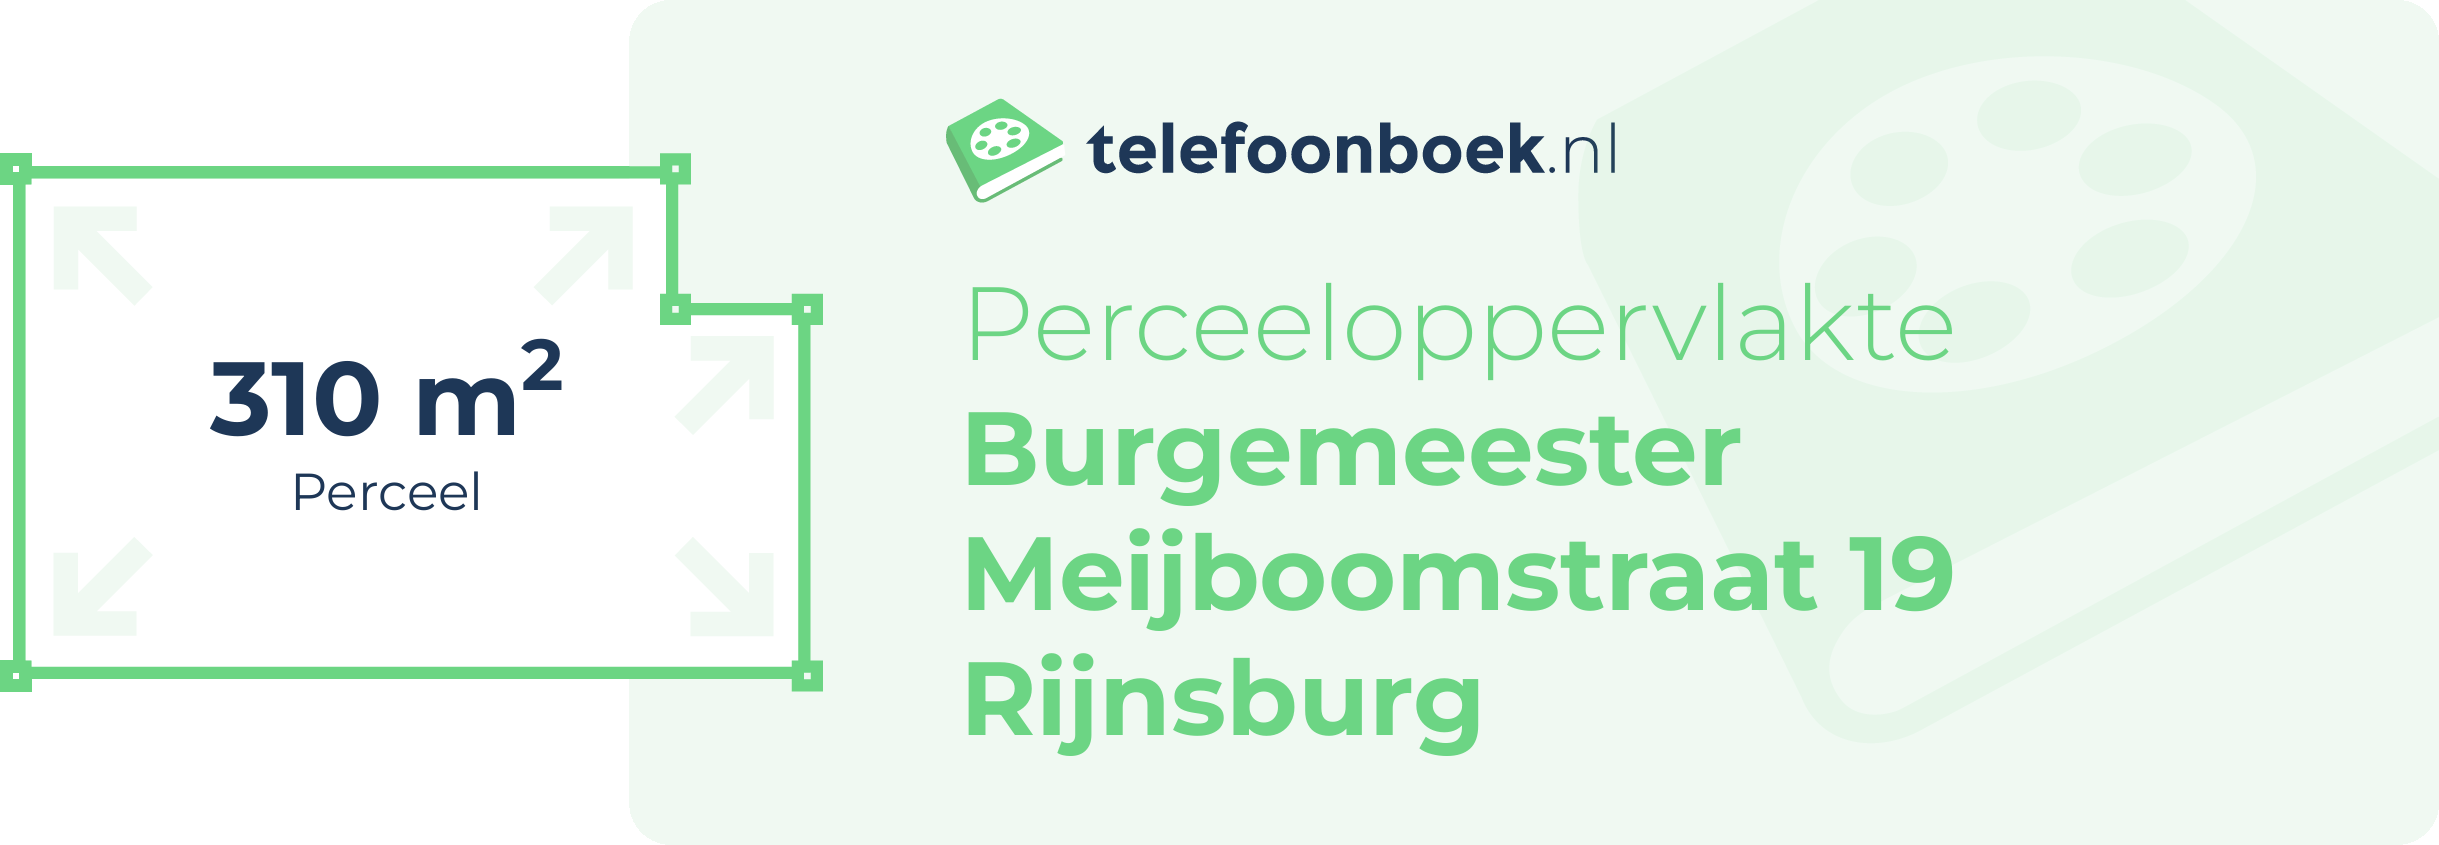 Perceeloppervlakte Burgemeester Meijboomstraat 19 Rijnsburg